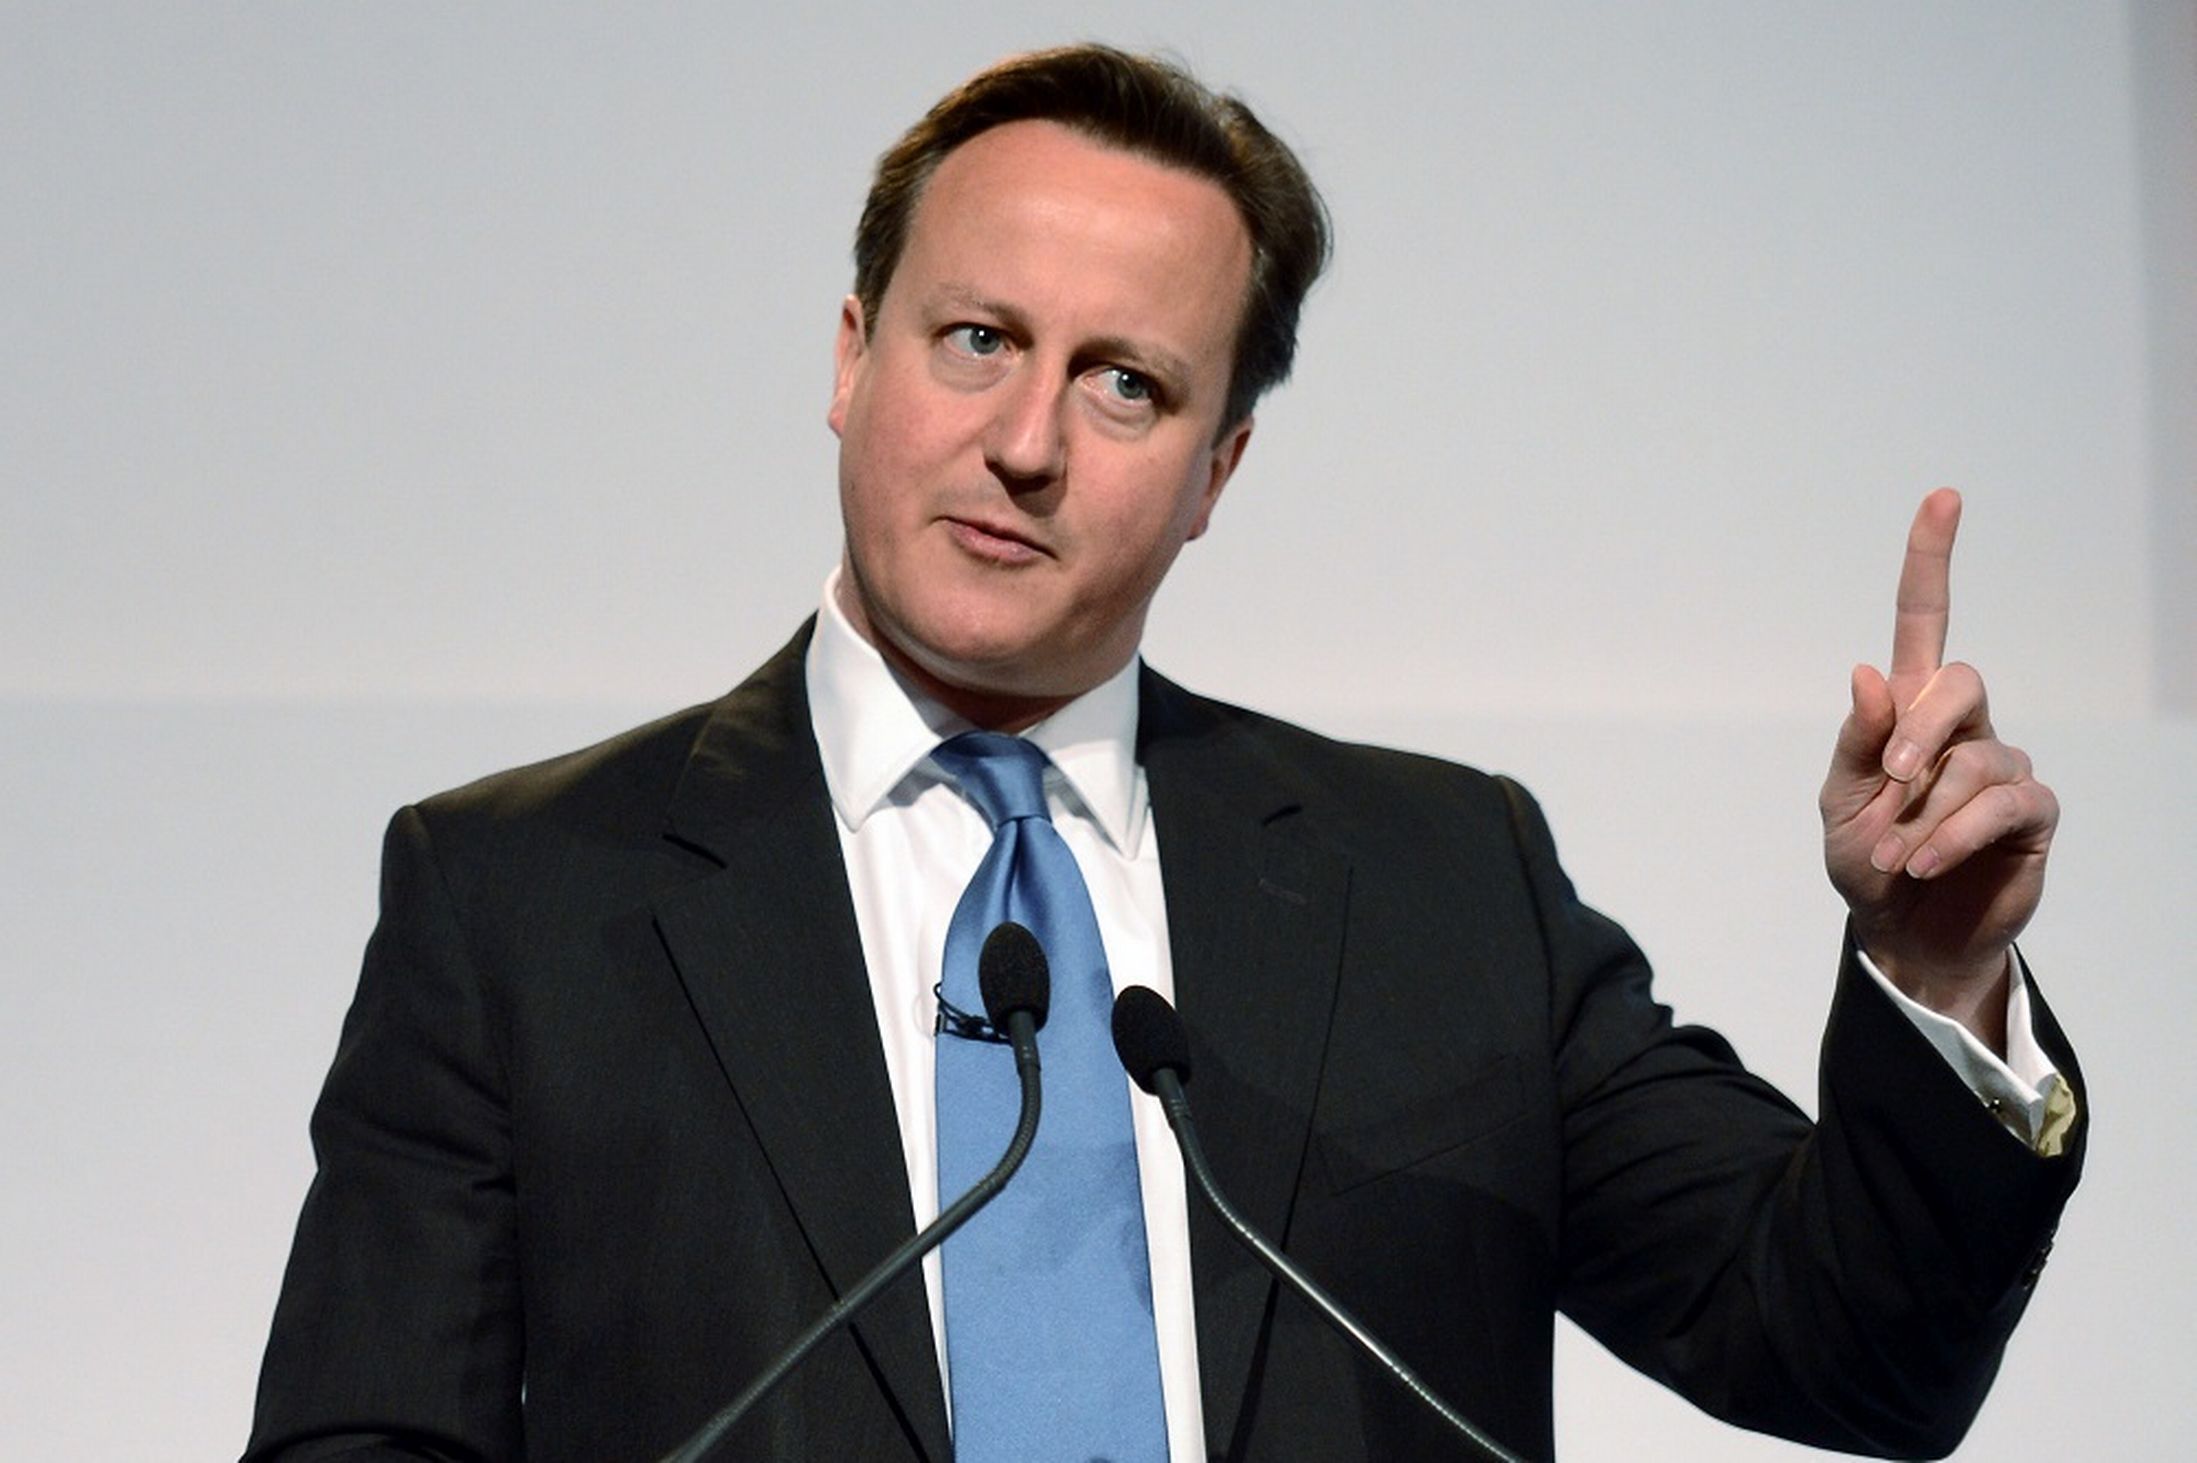 Video: British Prime Minister Jokes About Using Jiu-Jitsu on Political Opponent